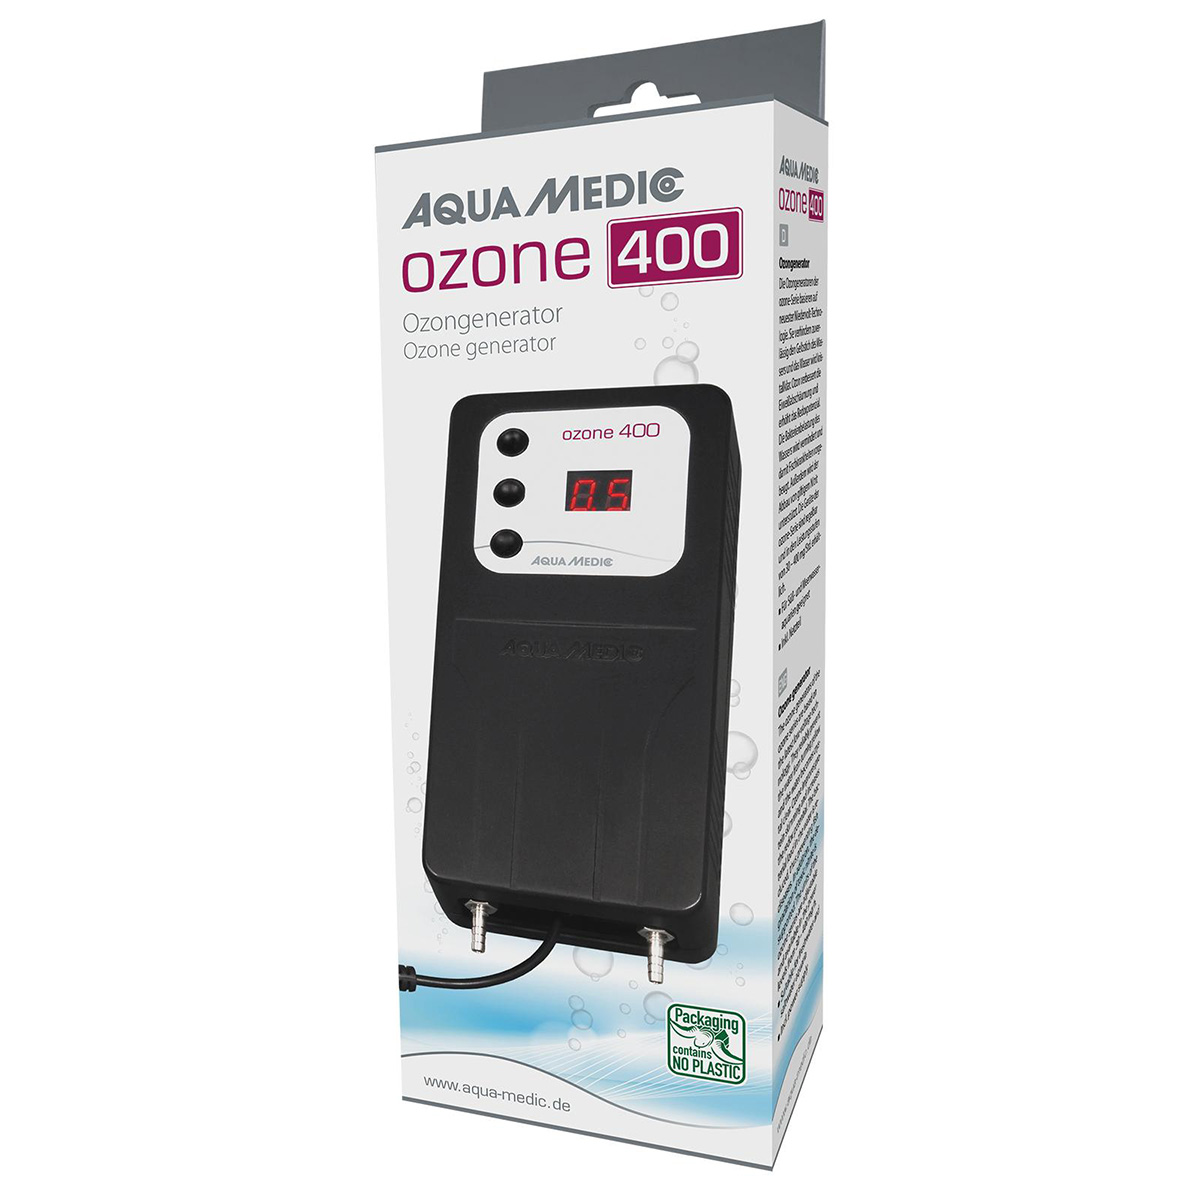 Aqua Medic Ozone 400 von Aqua Medic